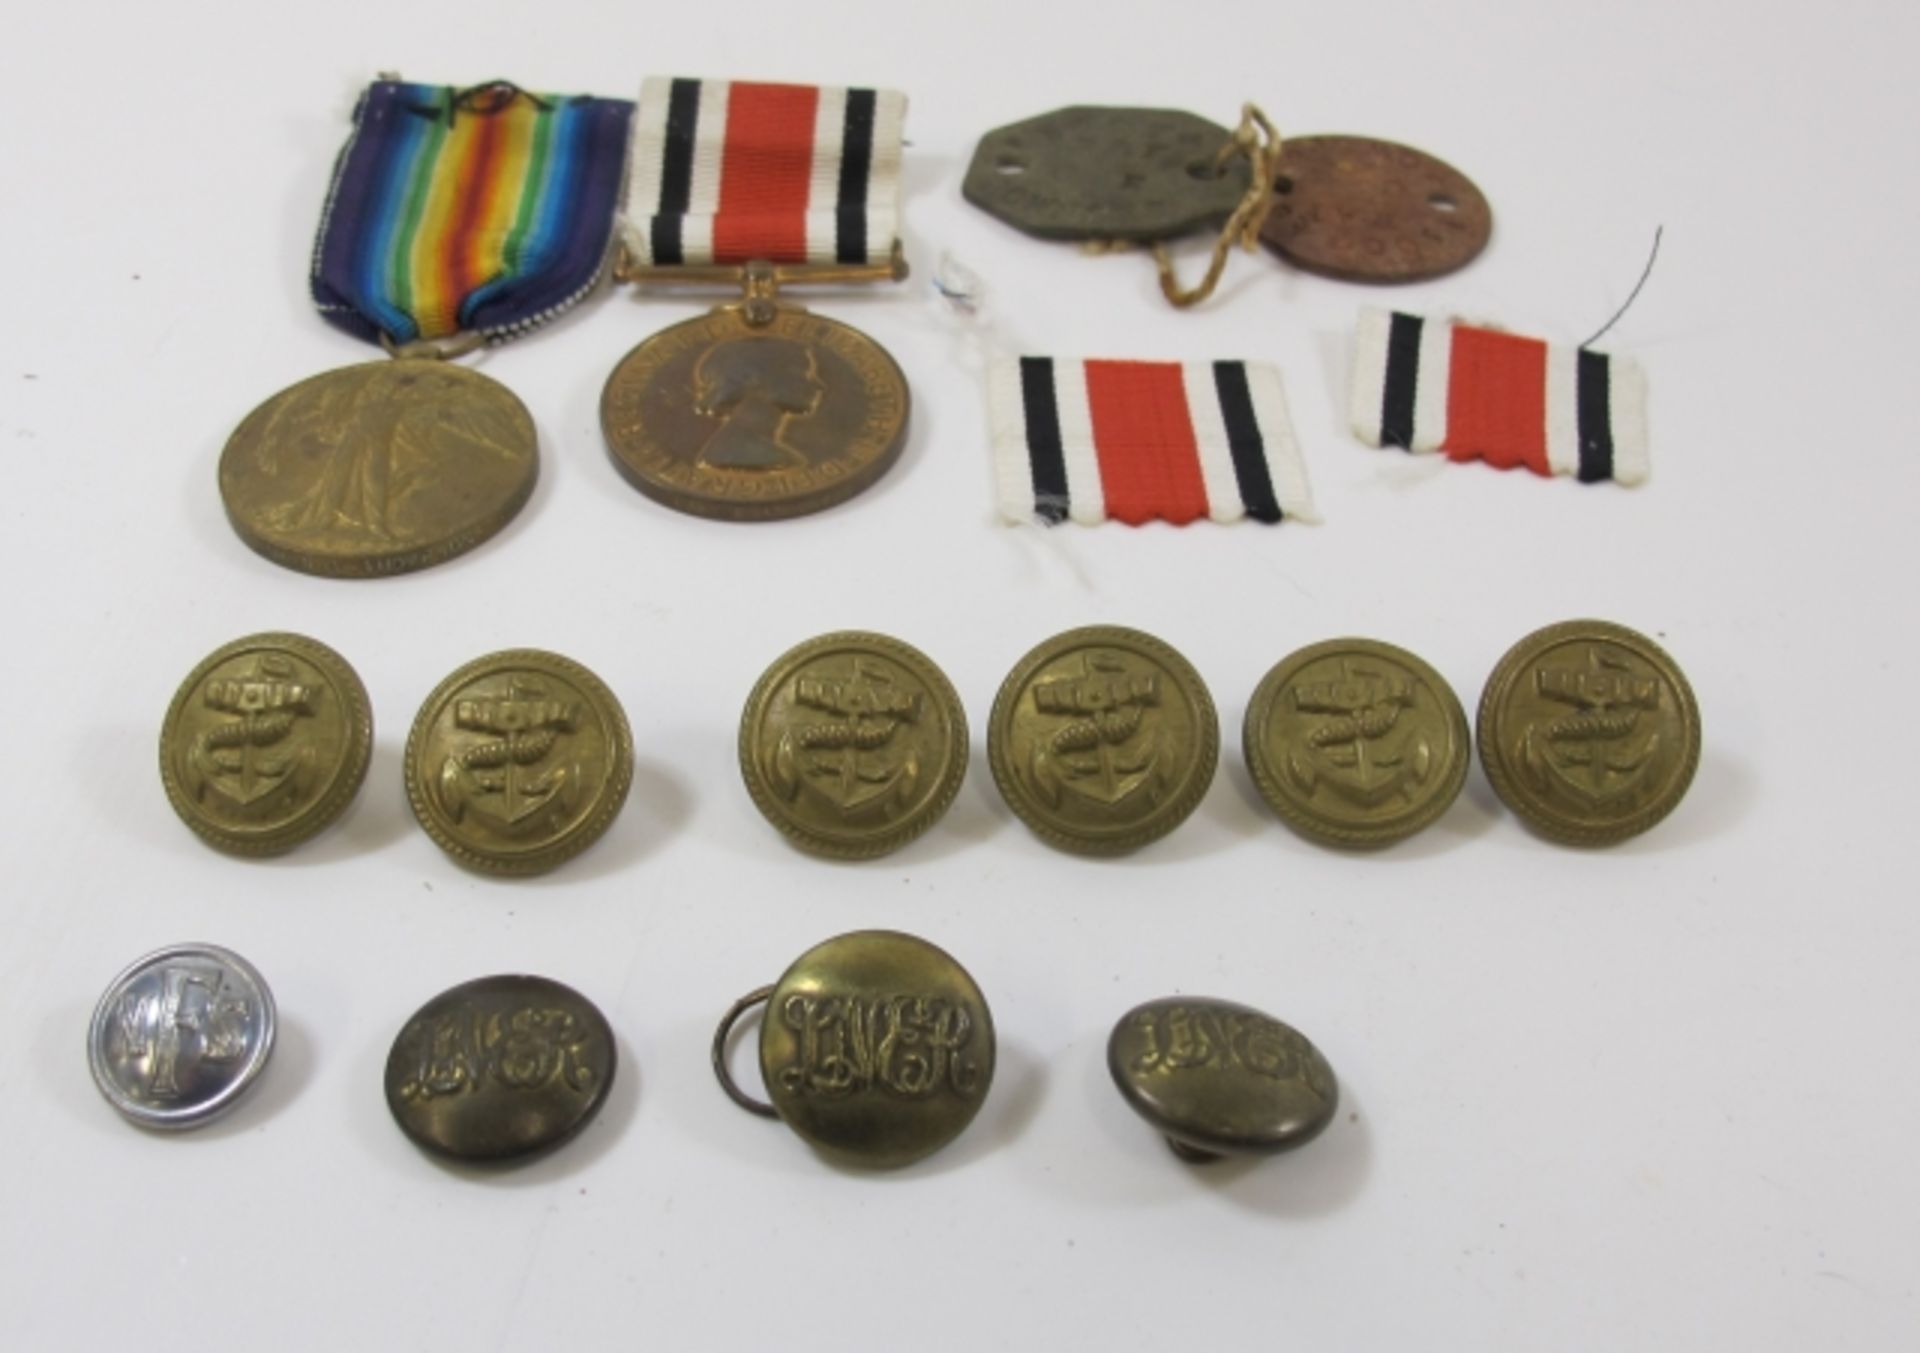 WW1 Victory Medal awarded to 18961 Gnr N. L. Thompson R. A. Elizabeth II Special Constabulary